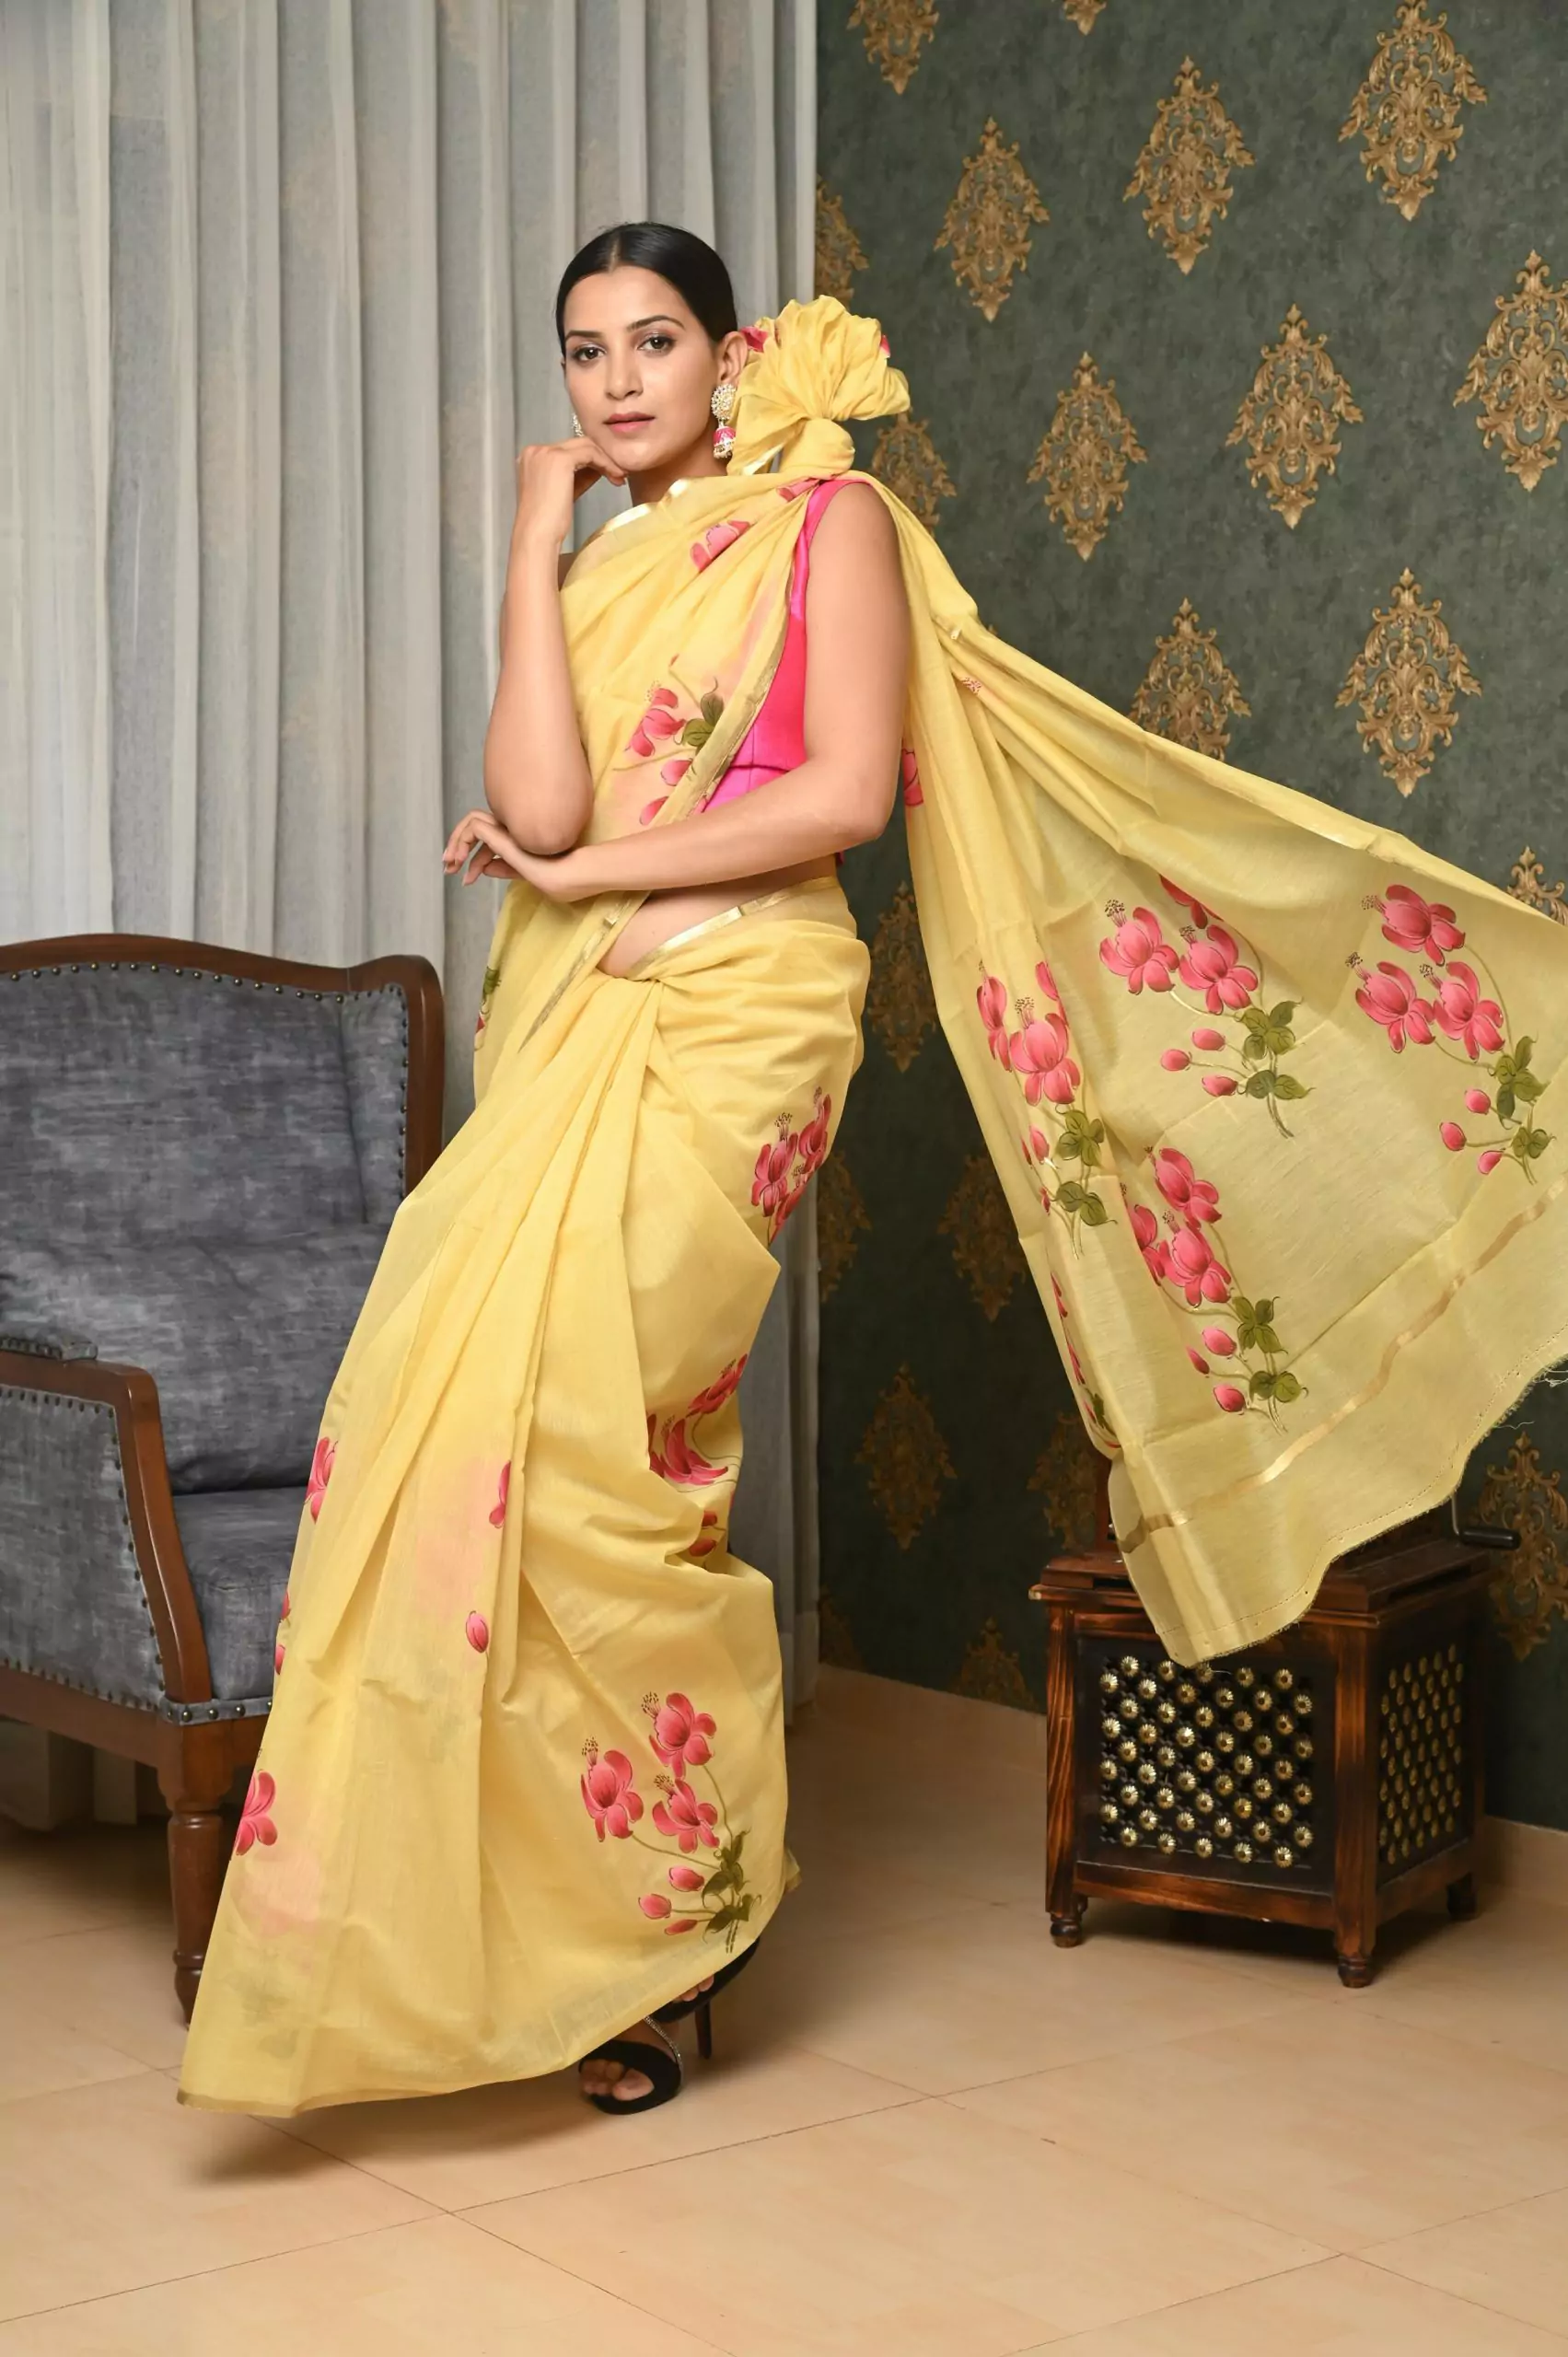 Purchase Mehndi Designed Kerala Hand Painted Saree